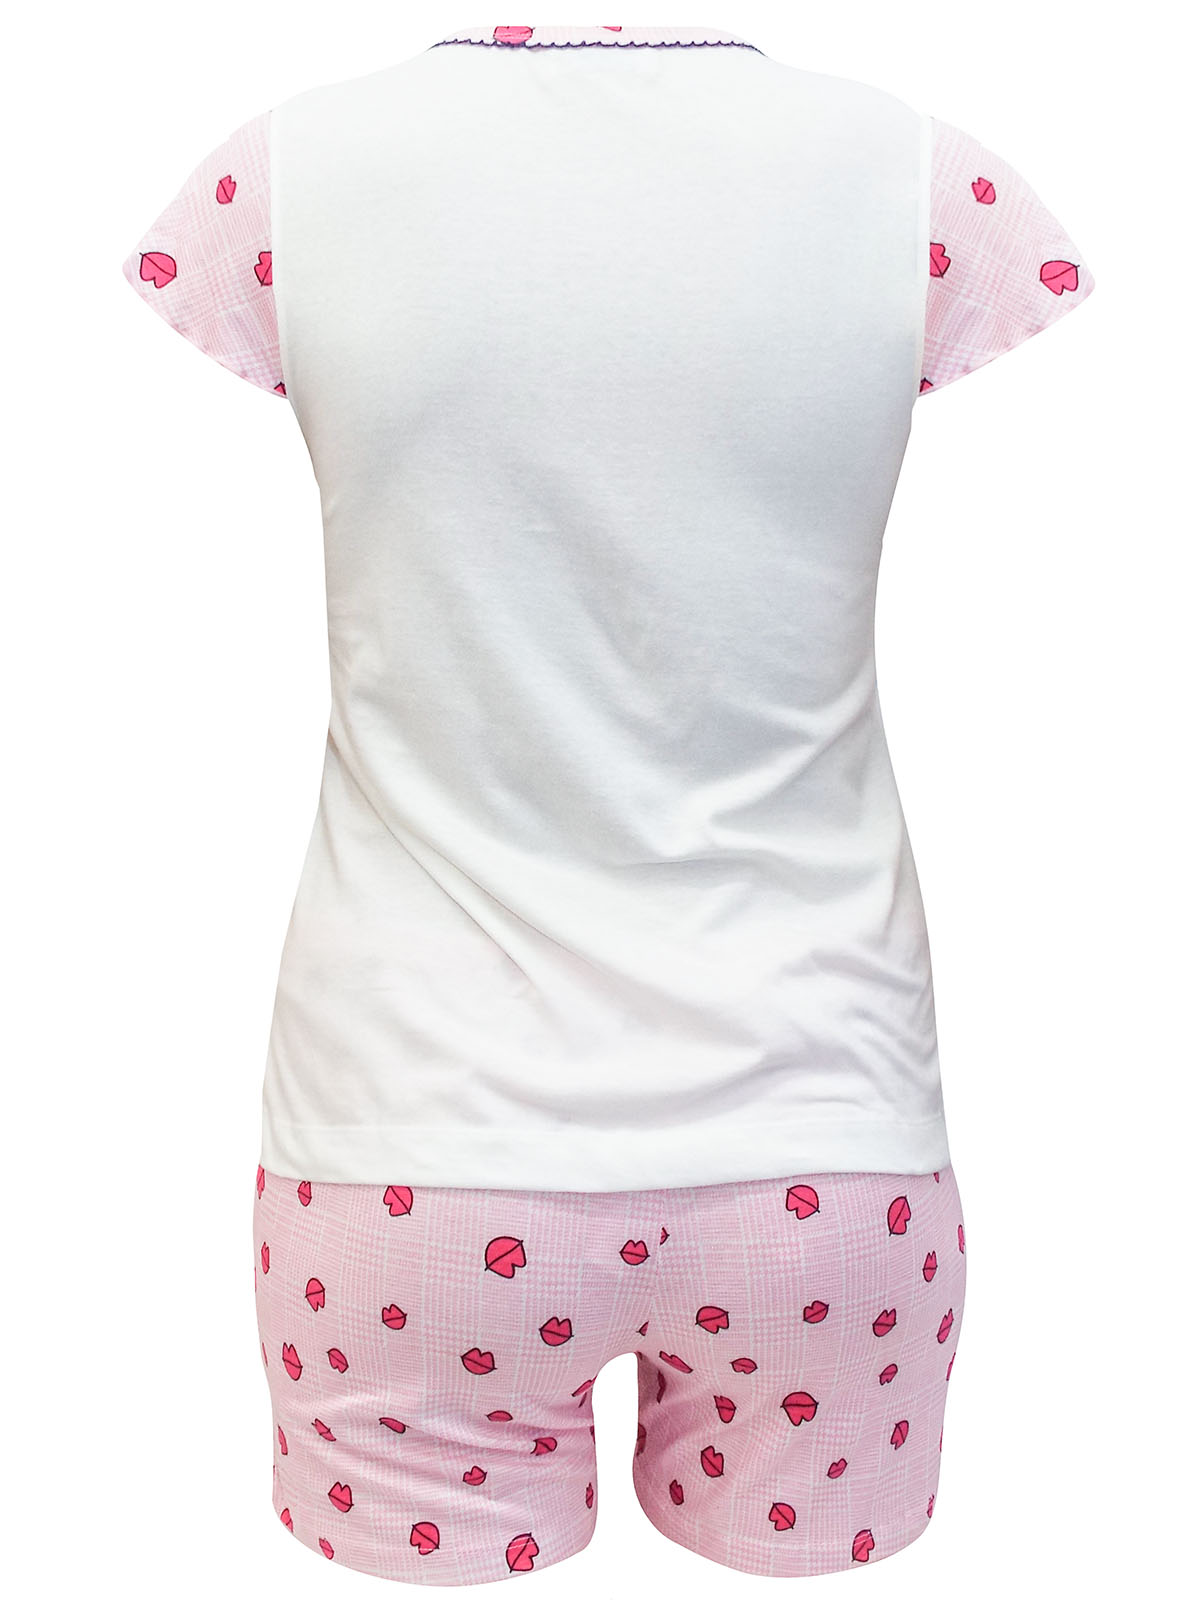 Italian Mi-A-Mi Full Length Cotton Pyjama's UK Sizes 10,12,14,16,18  **NEW**